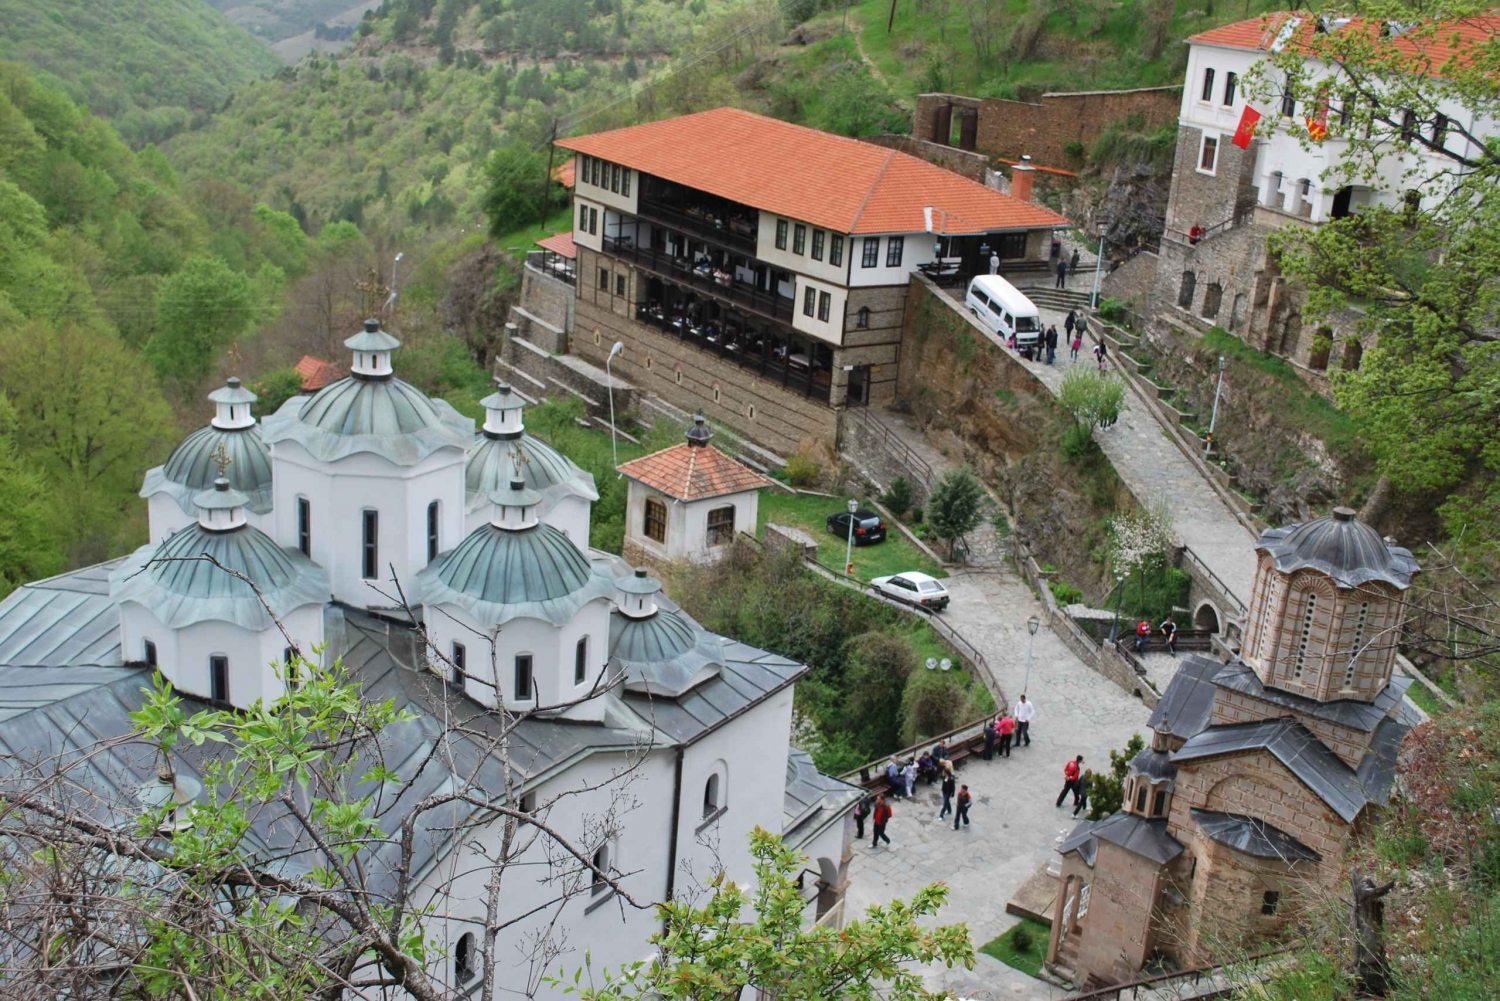 Skopje: Kokino Observatory and Osogovo Monastery Day Trip